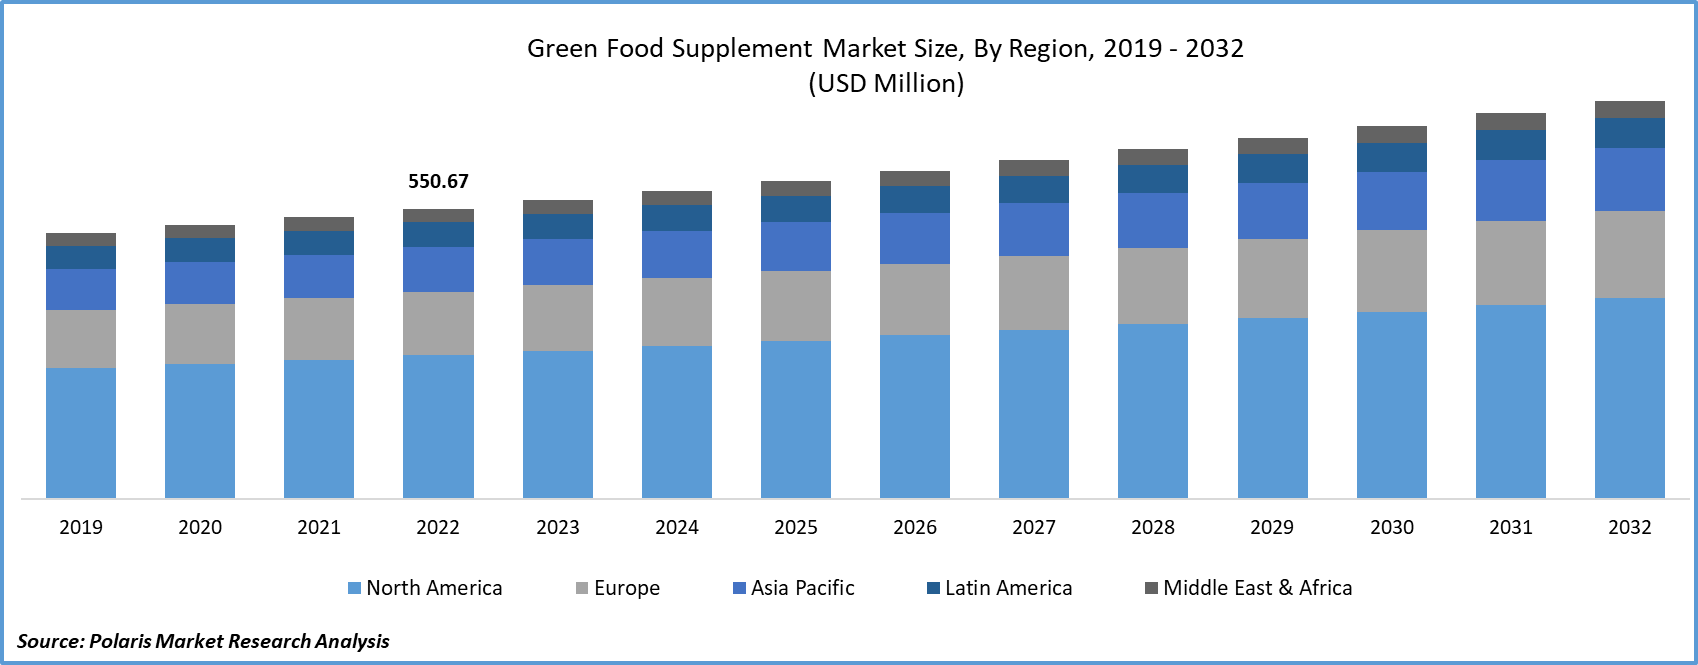 Green Food Supplement Market Size